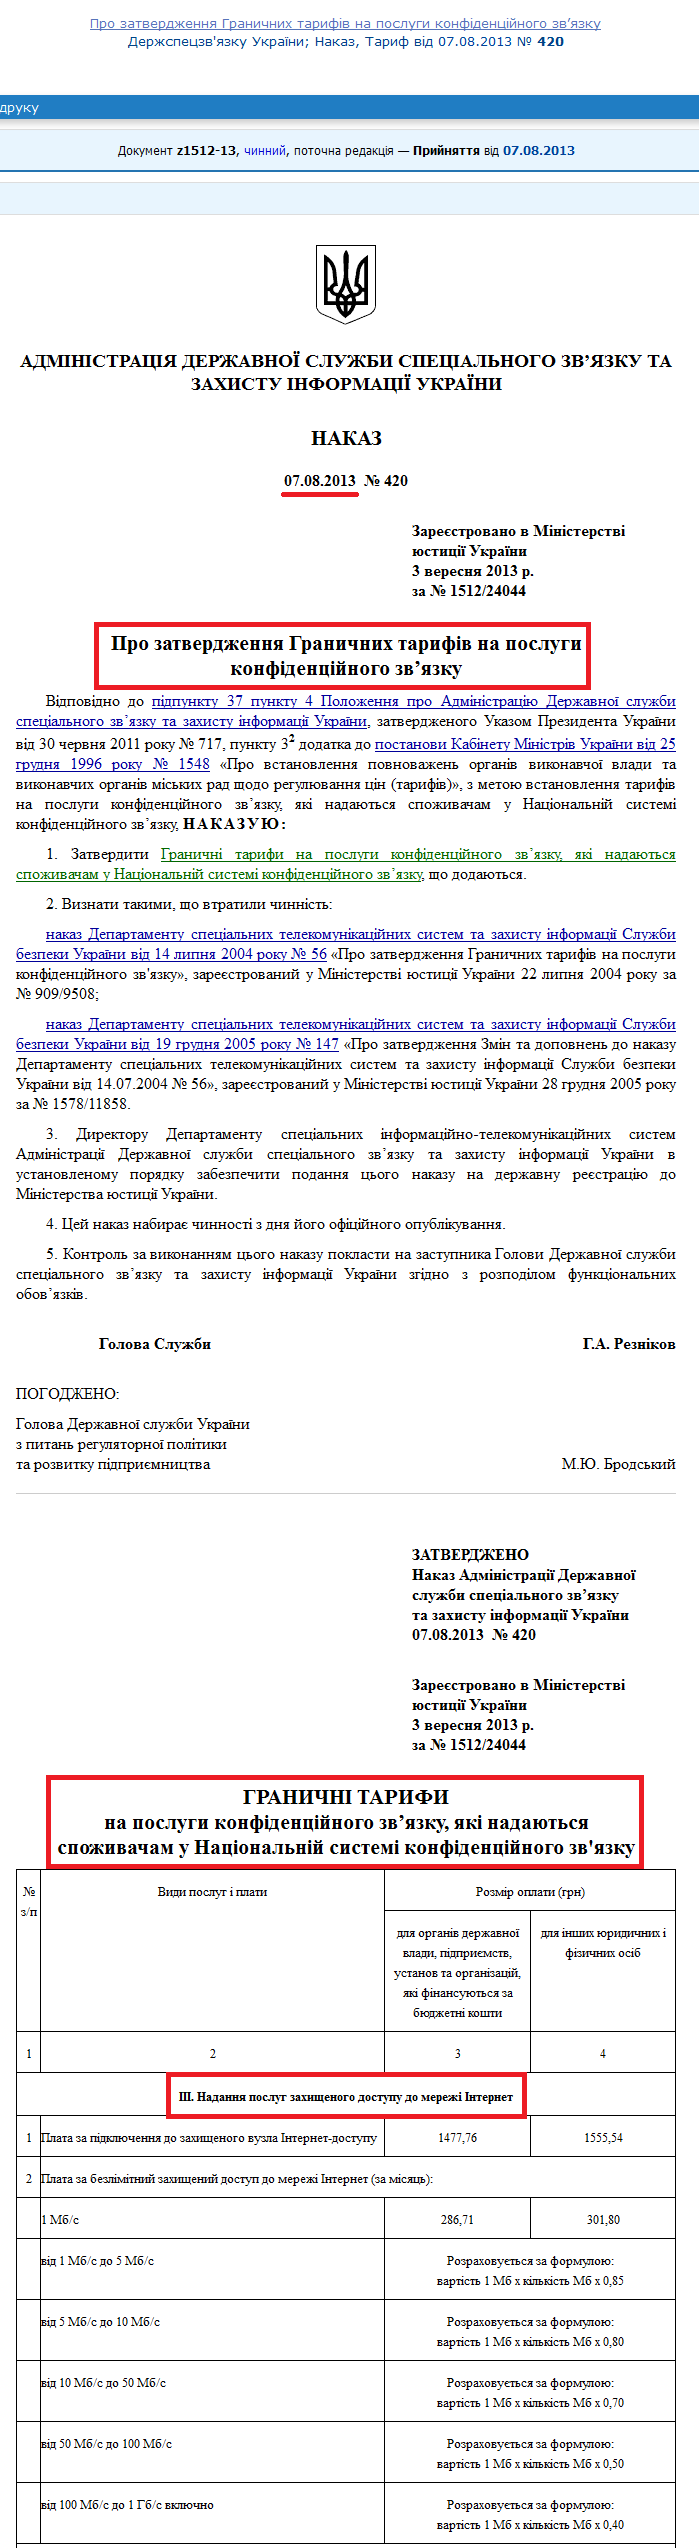 http://zakon2.rada.gov.ua/laws/show/z1512-13